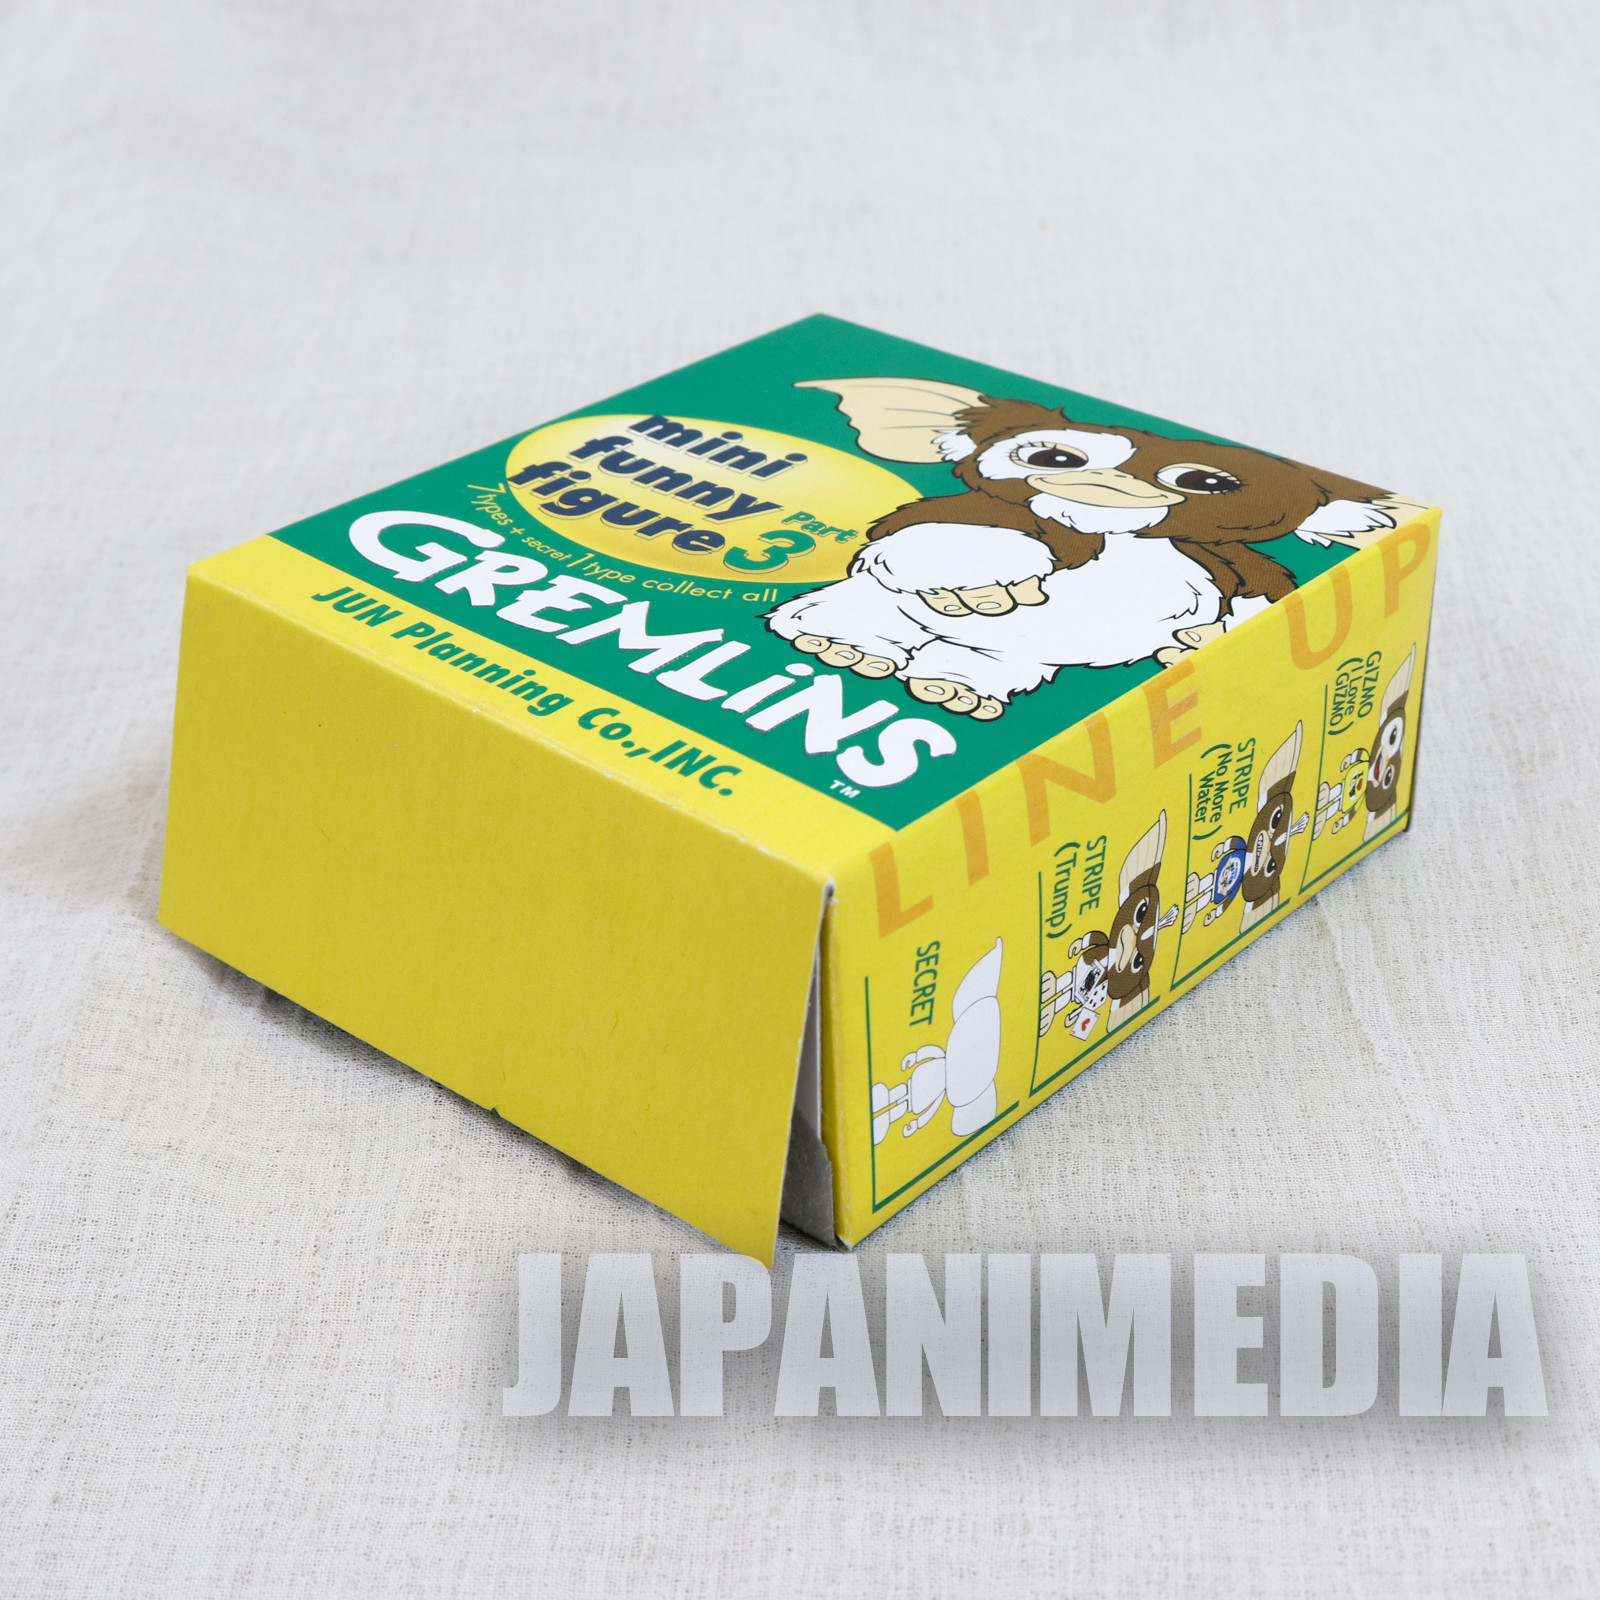 Gremlins 2 Jun Planning Mini Funny Figure Part.3 Stripe No More Water Ver. JAPAN